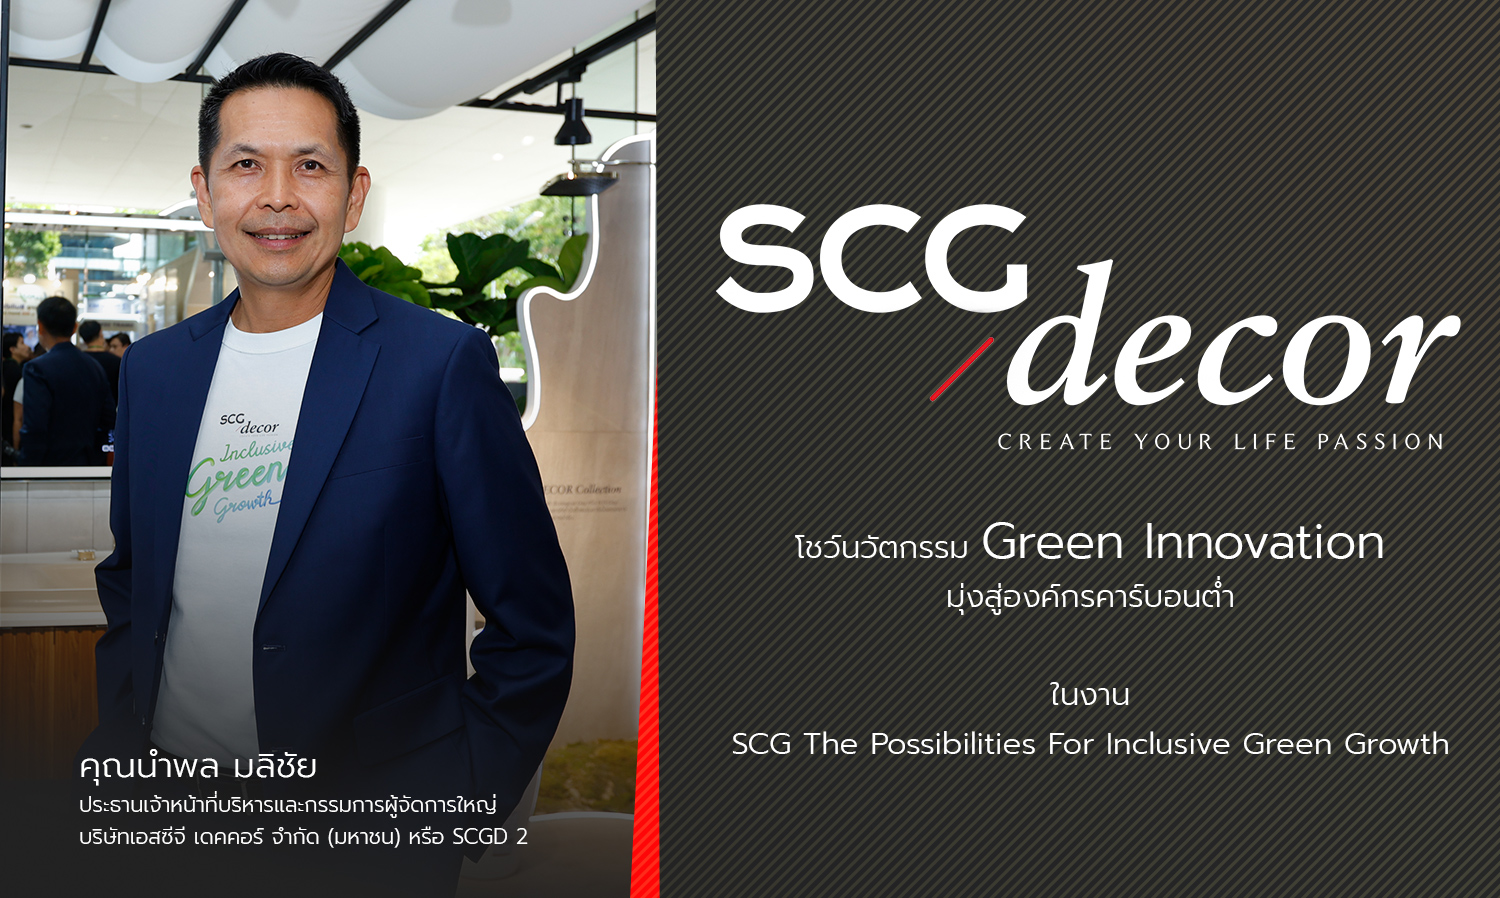 SCGD X COTTO โชว์นวัตกรรม Green Innovation มุ่งสู่องค์กรคาร์บอนต่ำ ในงาน SCG The Possibilities For Inclusive Green Growth